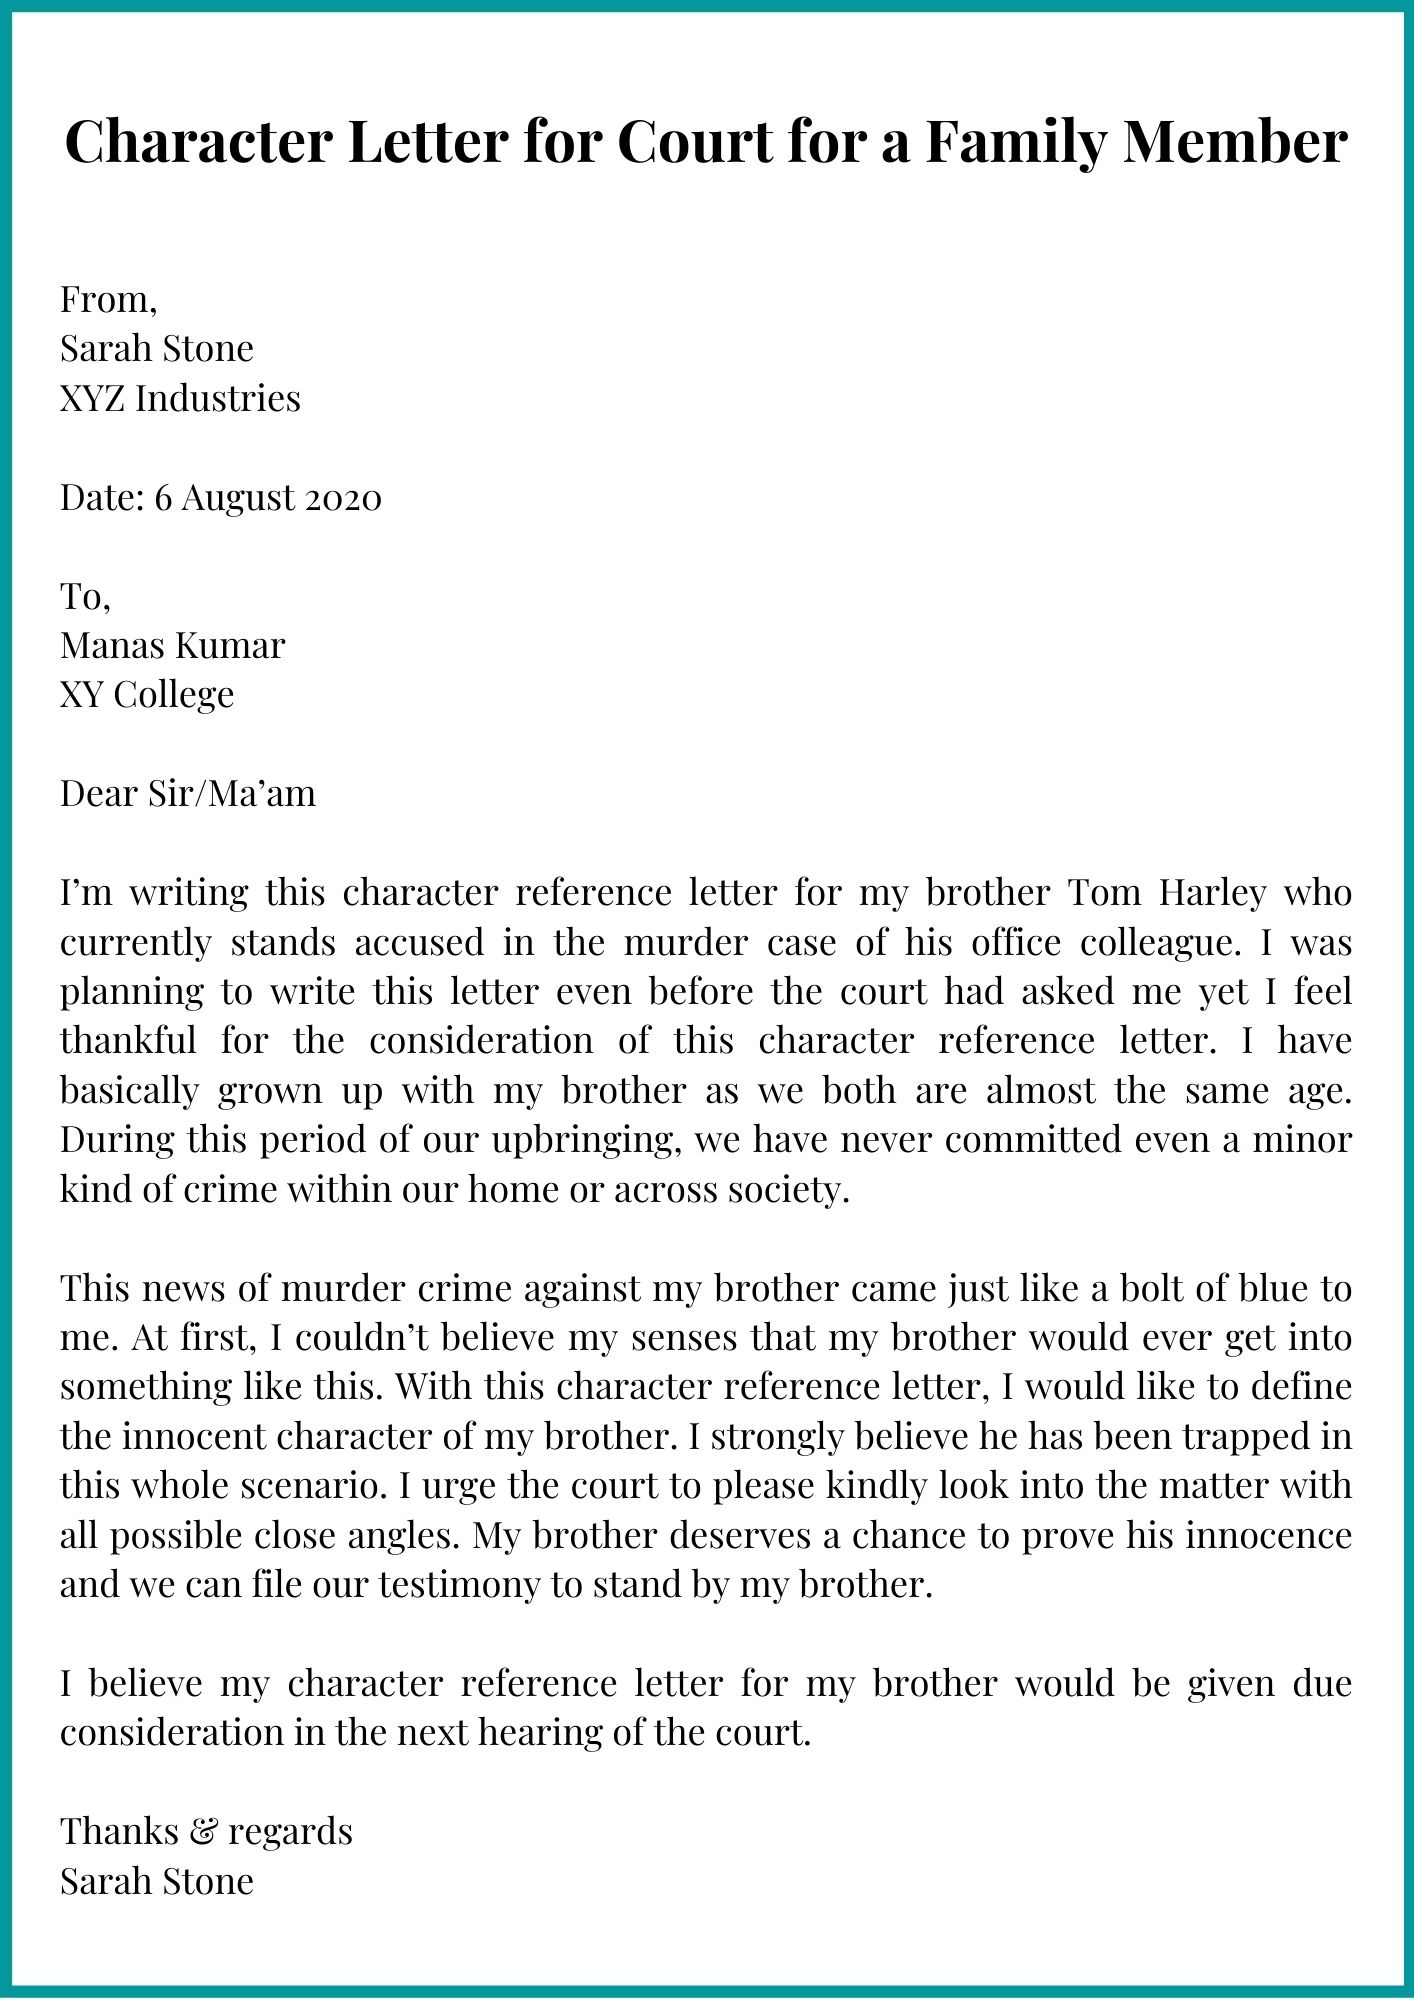 Sample Character Letter For Court For A Family Member